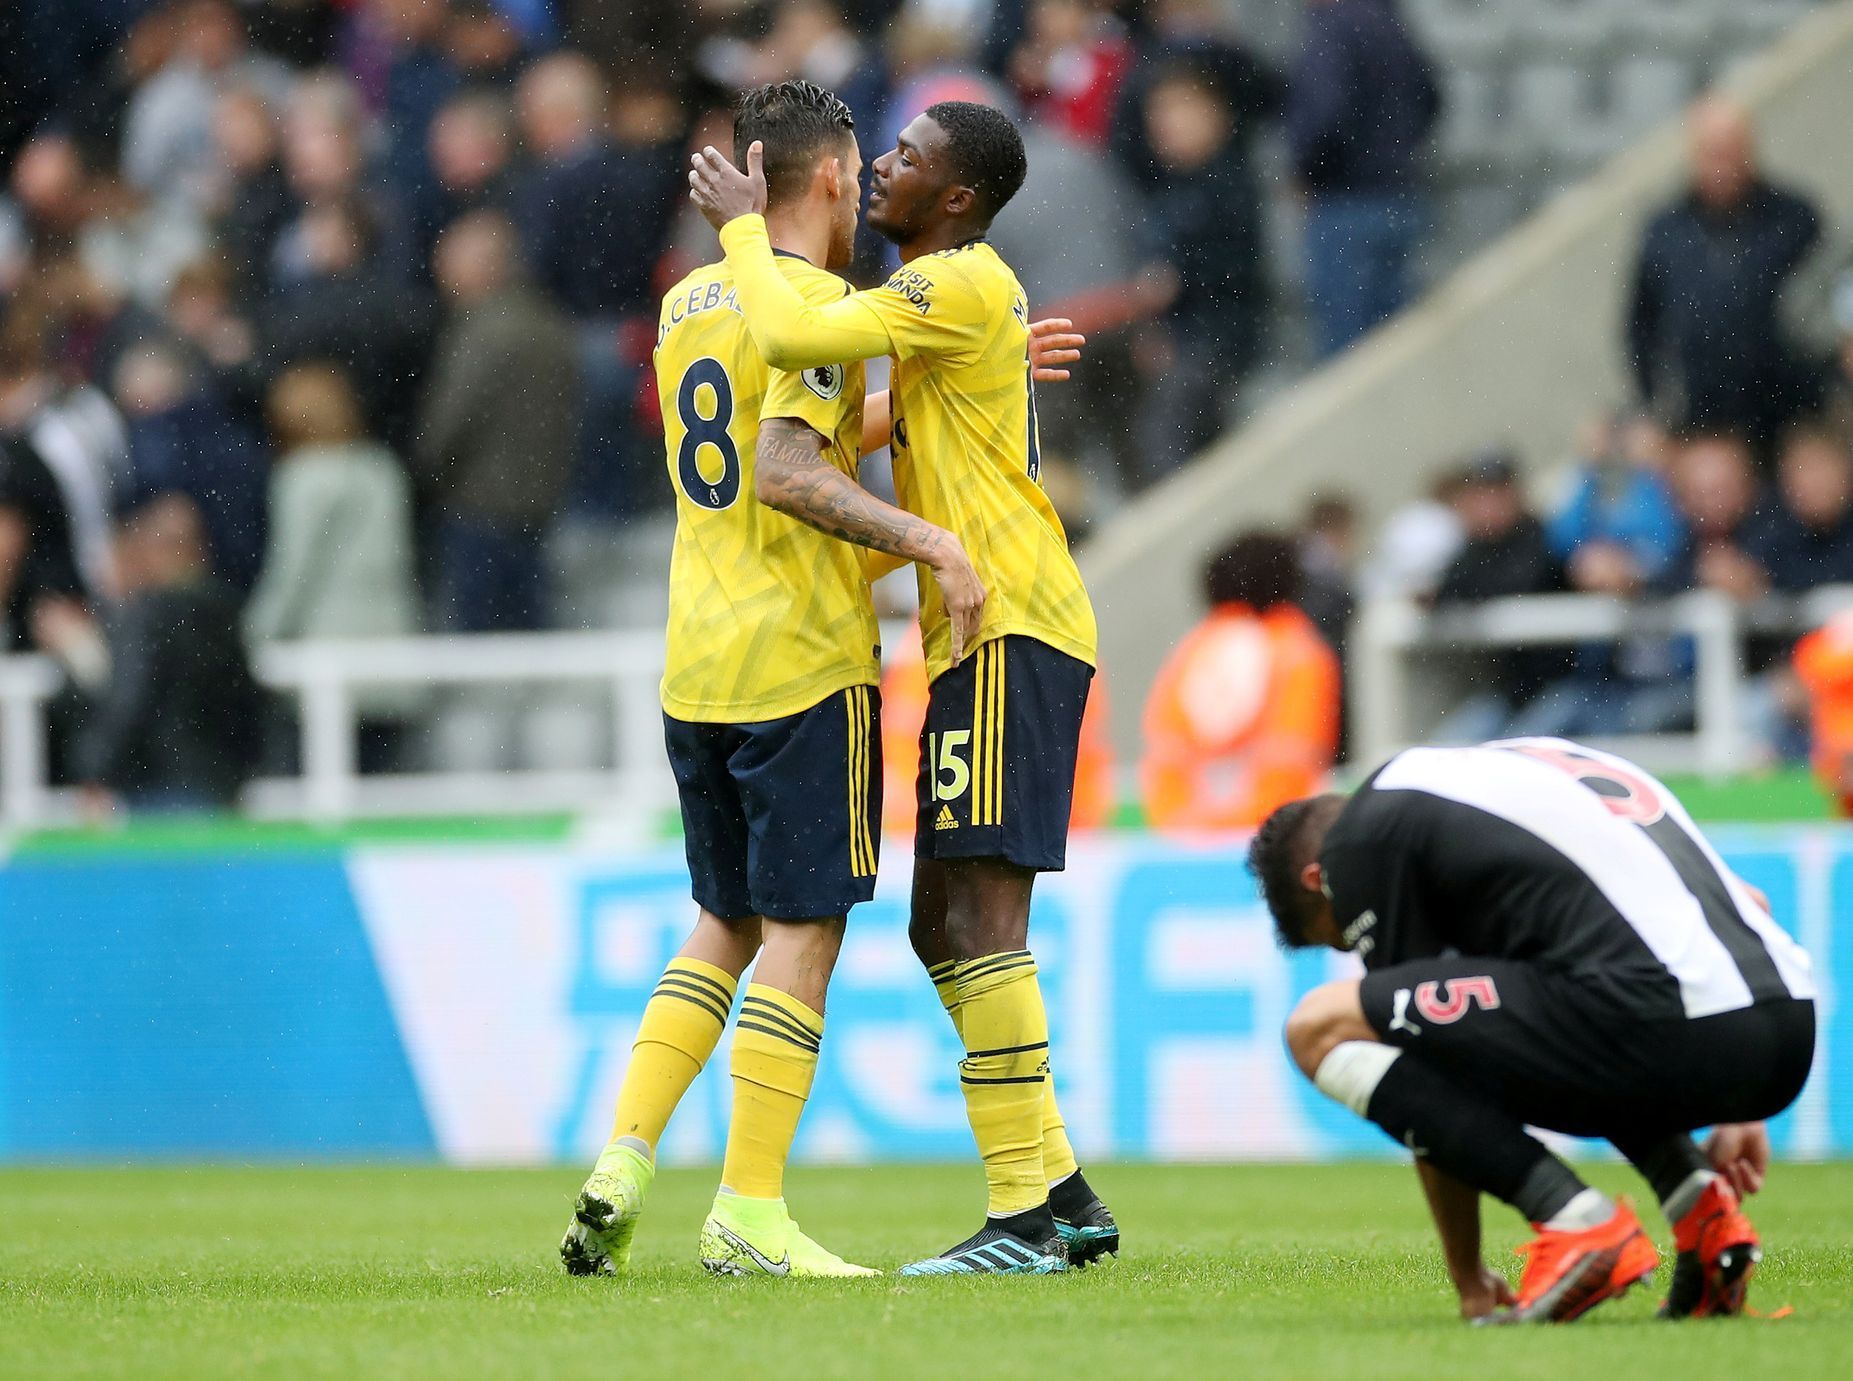 Hráči Arsenalu Dani Ceballos a Ainsley Maitland-Niles slaví výhru nad Newcastlem